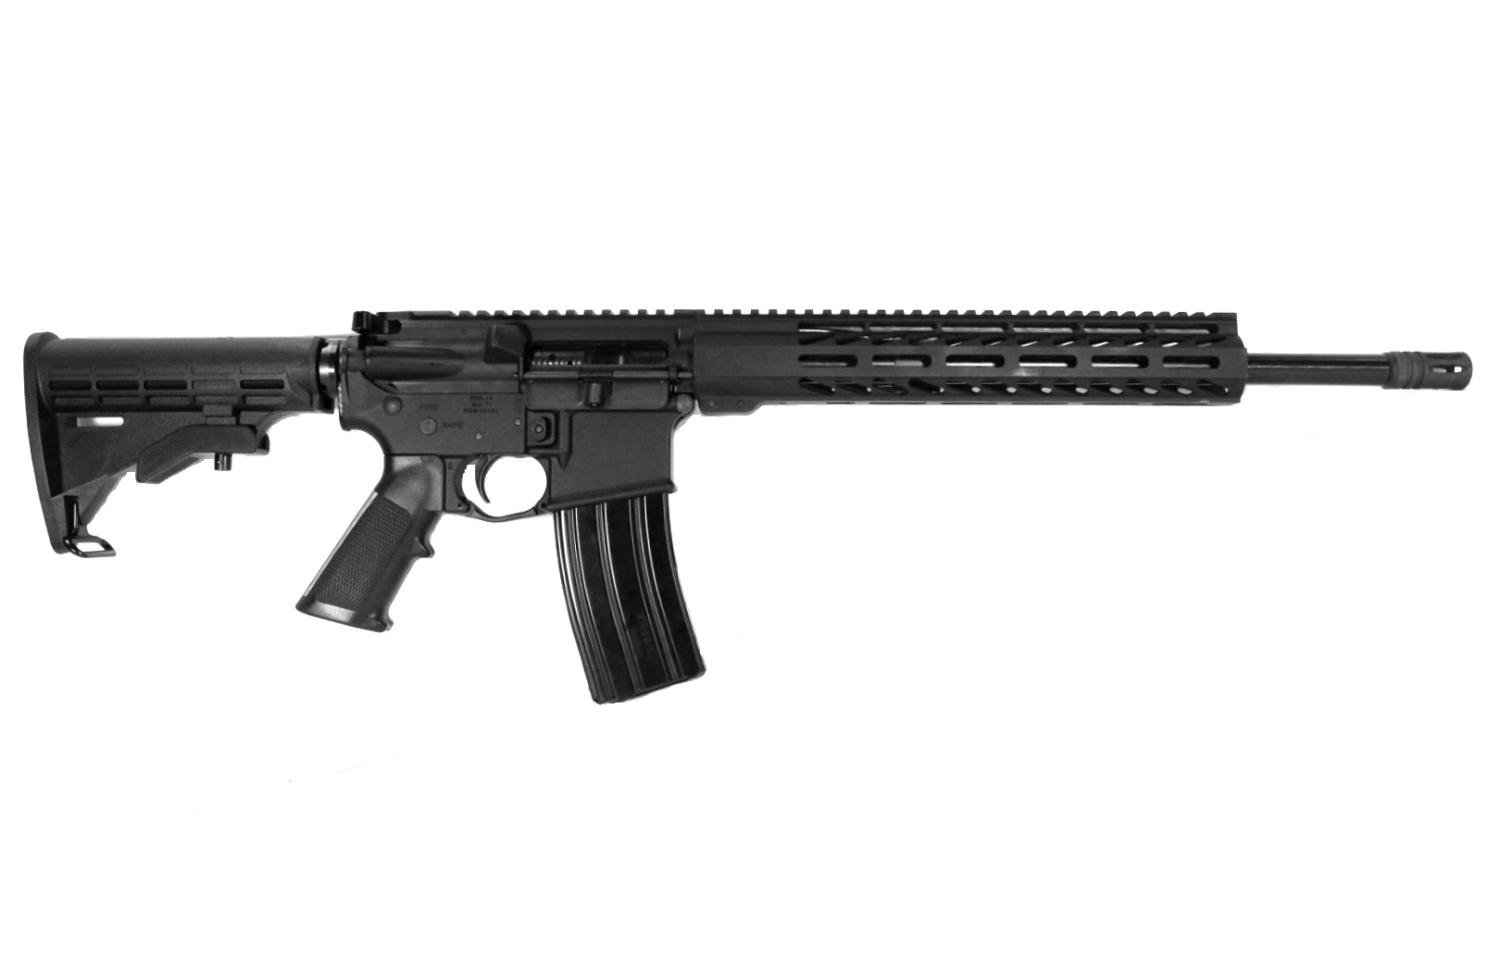 P2A PATRIOT 16" 300 Blackout 1/8 Pistol Length Melonite M-LOK Rifle - $671.49 after 15% off coupon